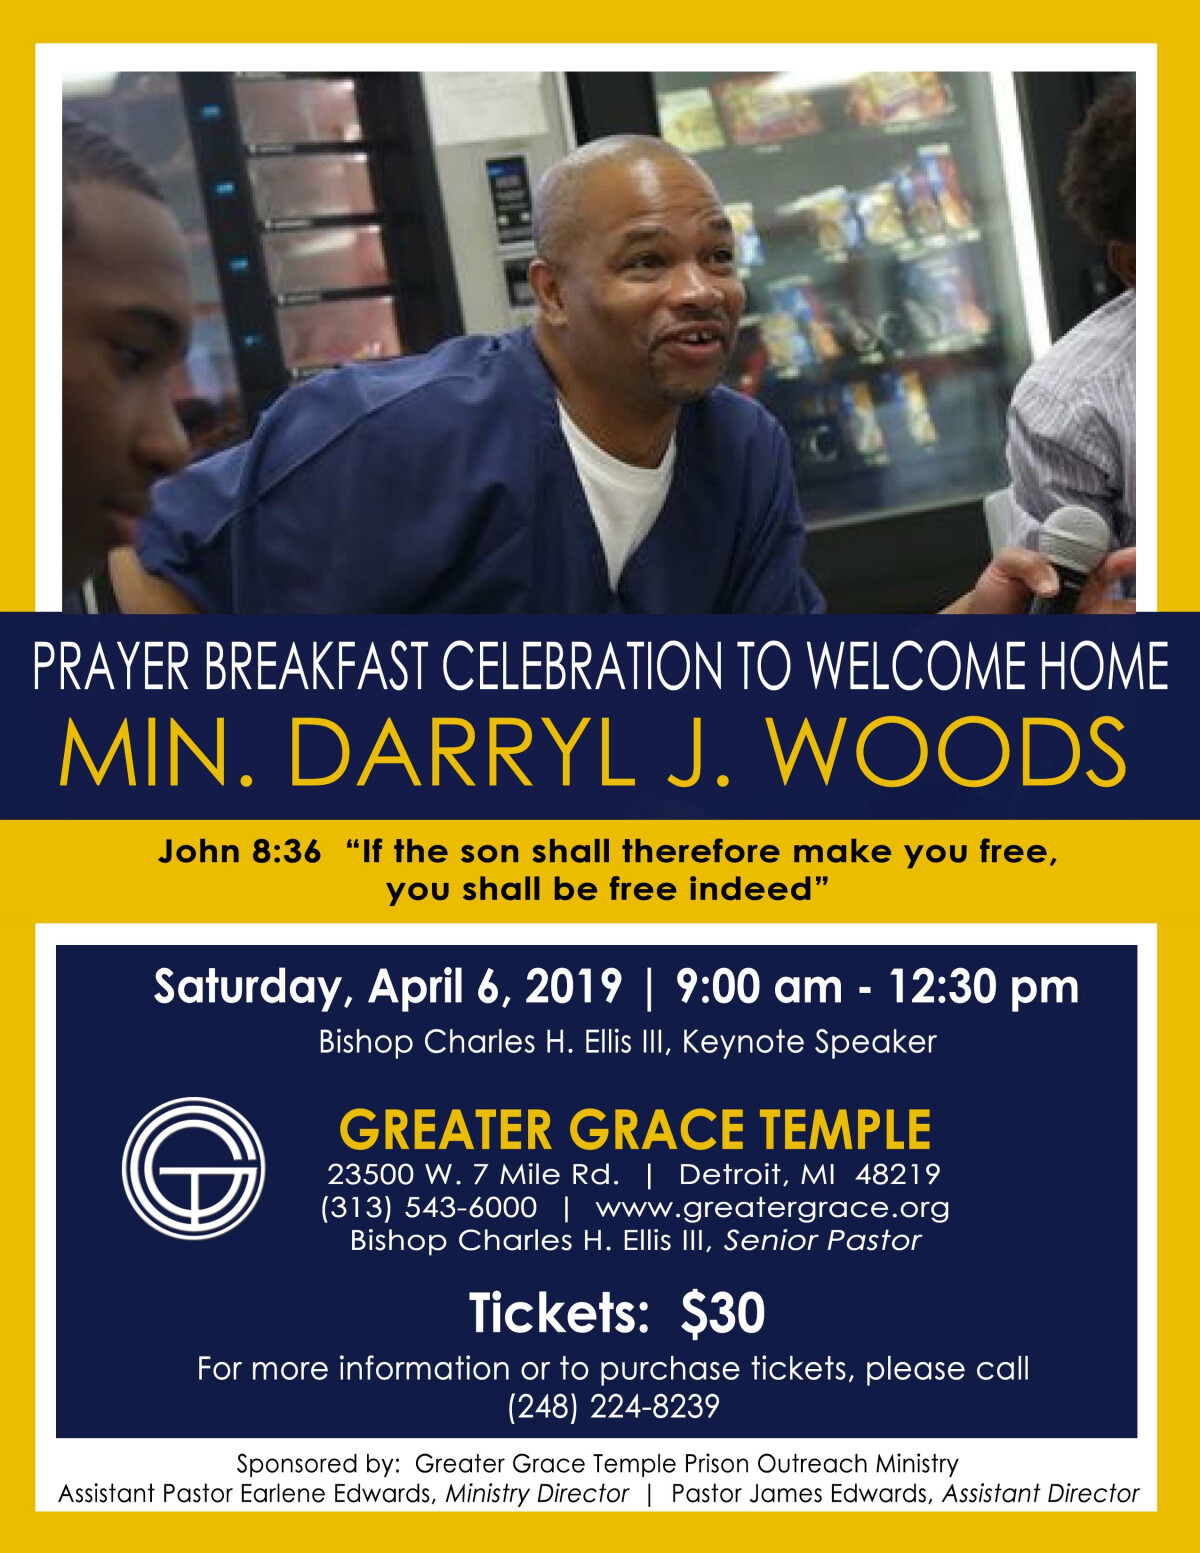 Prayer Breakfast Celebrating Min. Darryl Woods